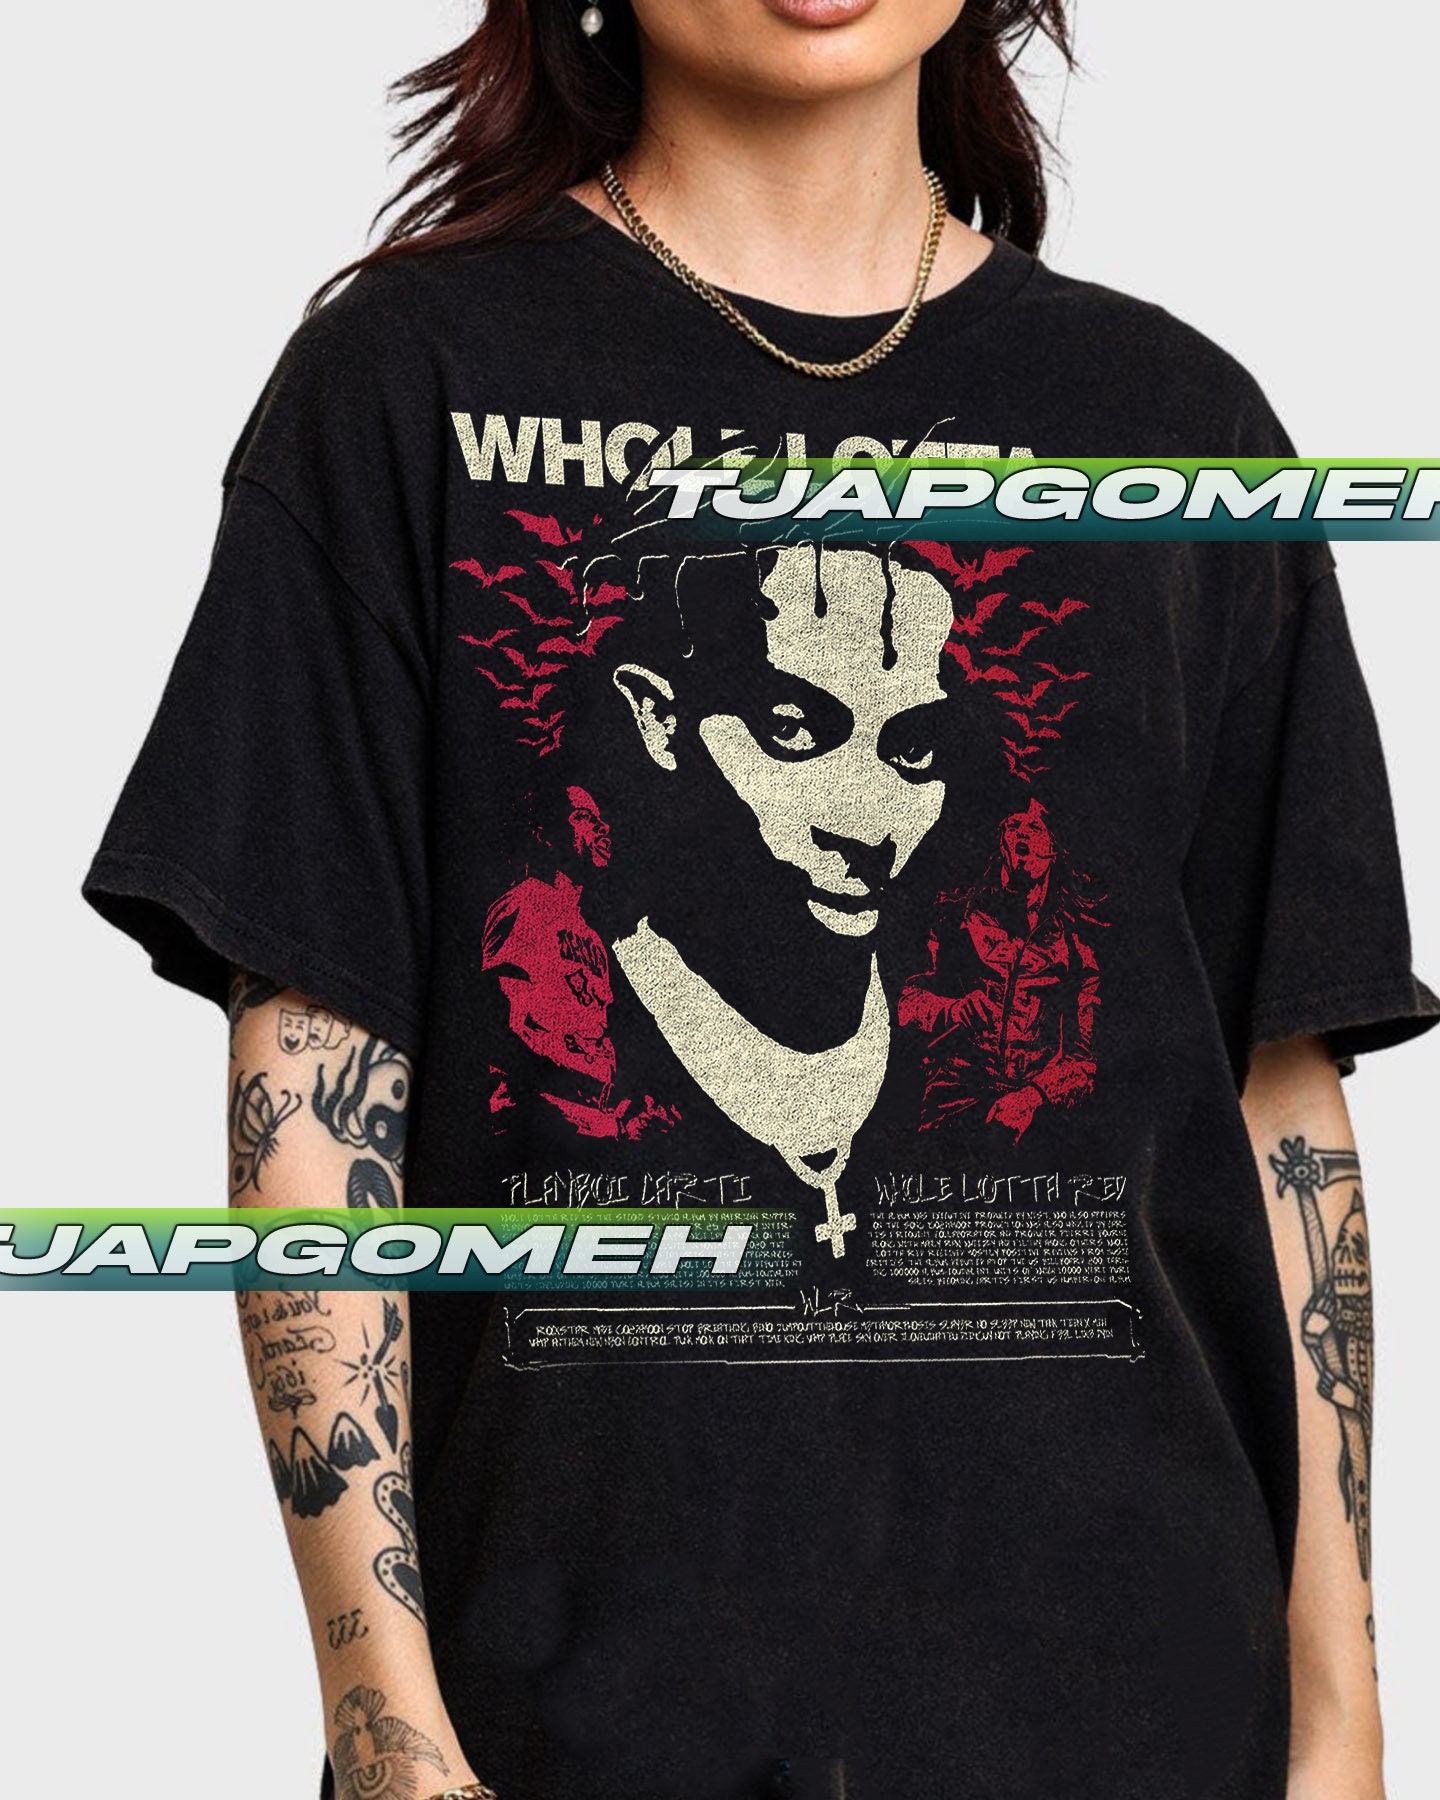 Dshztooma Rapper Playboi Carti T Shirt Music Album Whole Lotta Red Graphic T Shirts Men Women Fashion Hip Hop